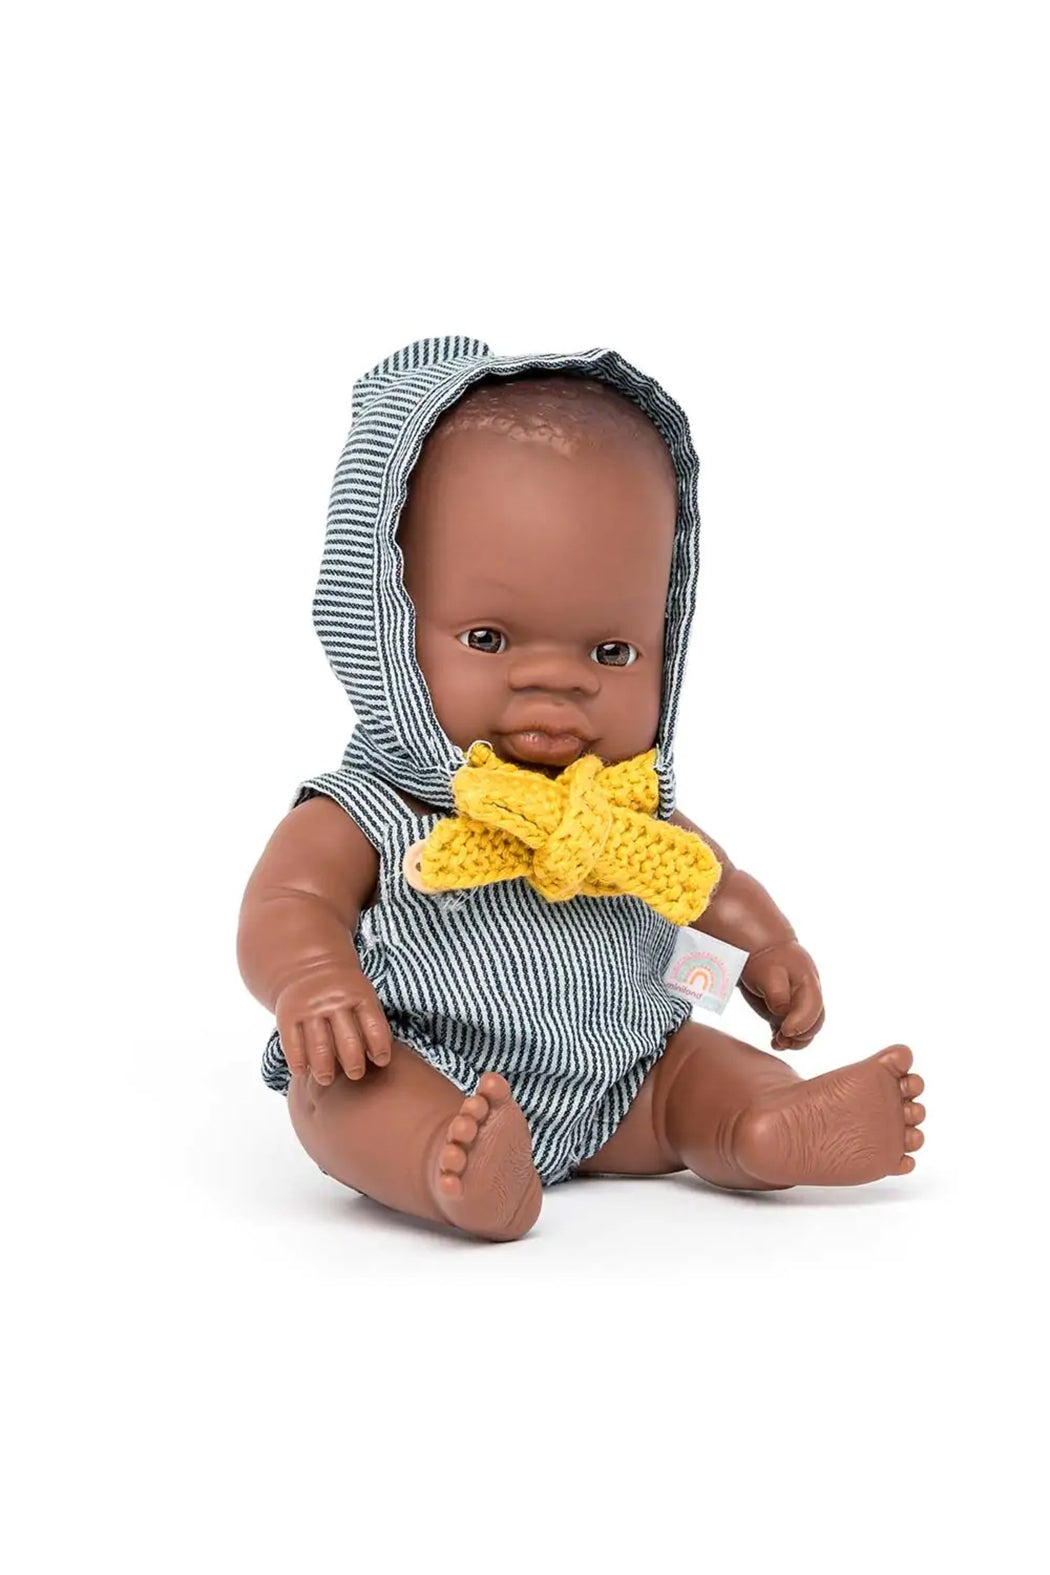 Miniland Boy Doll With Clothing - 8 1/4